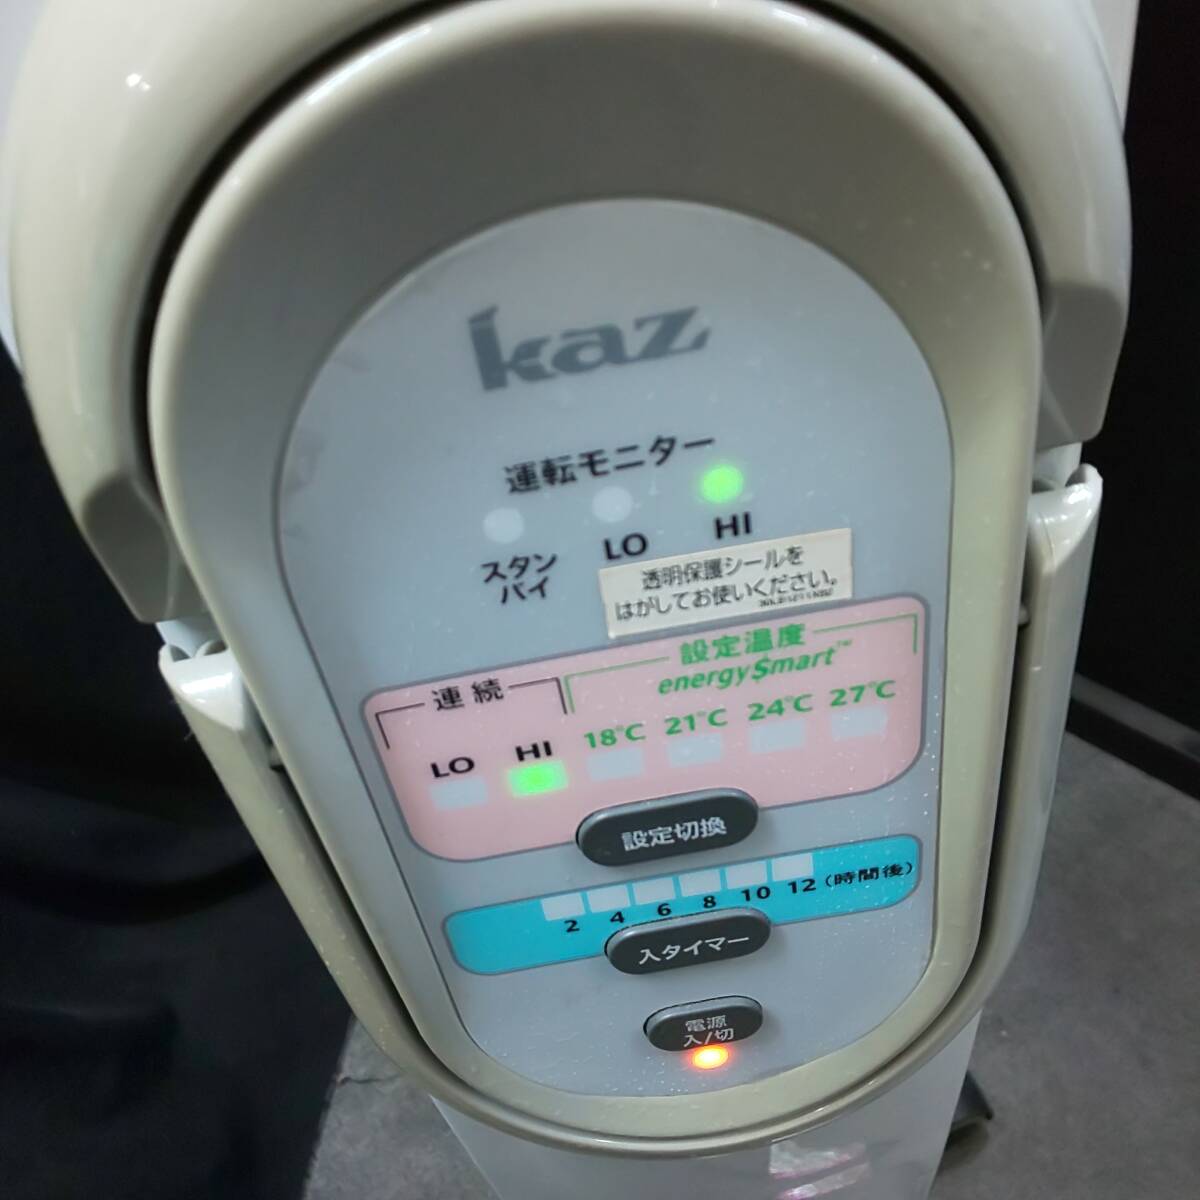 *kaz*KAZ electric oil heater 1200W temperature degree setting * timer attaching KOC1211T immediately shipping direct pickup welcome ( Tokyo area Edogawa-ku )